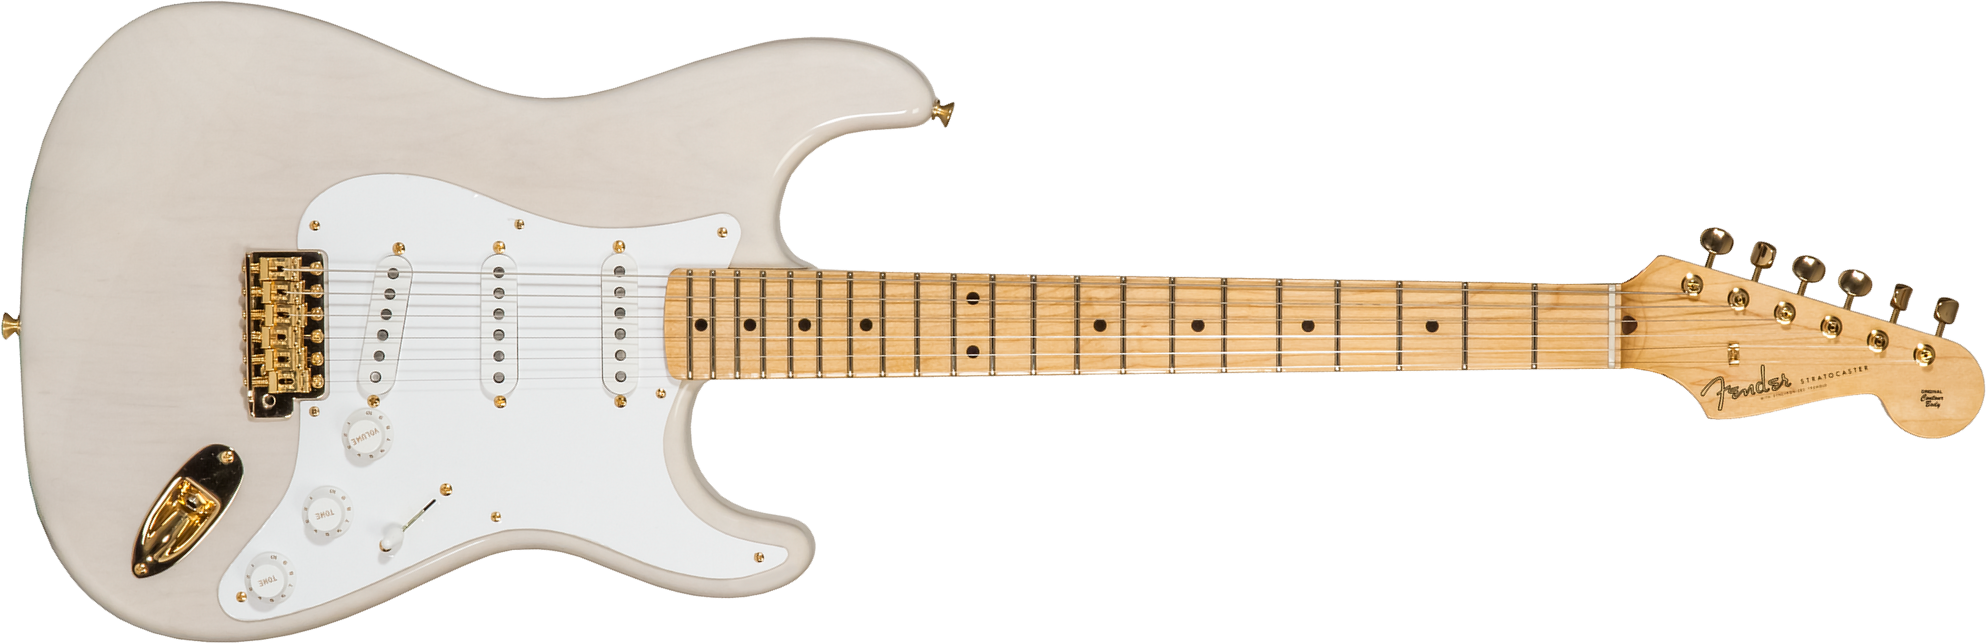 Fender Custom Shop Strat 1957 3s Trem Mn #r125475 - Nos White Blonde - Guitarra eléctrica con forma de str. - Main picture